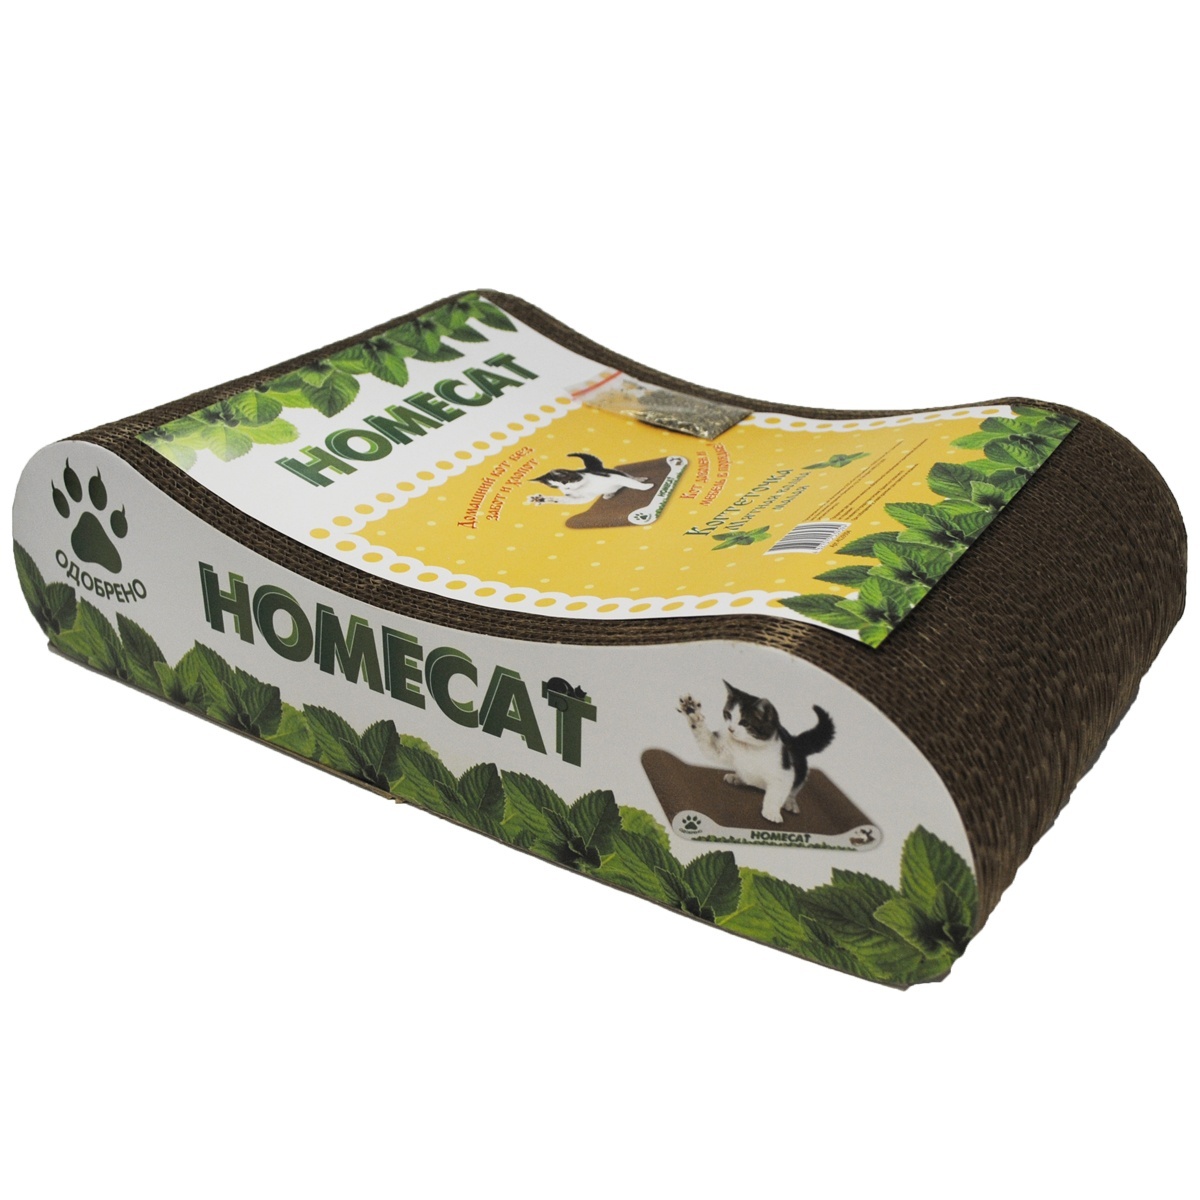 Homecat Homecat когтеточкаМятная волна, гофрокартон, 41х24х10 см (500 г) homecat мятная волна когтеточка гофрокартон 48х25х8 см